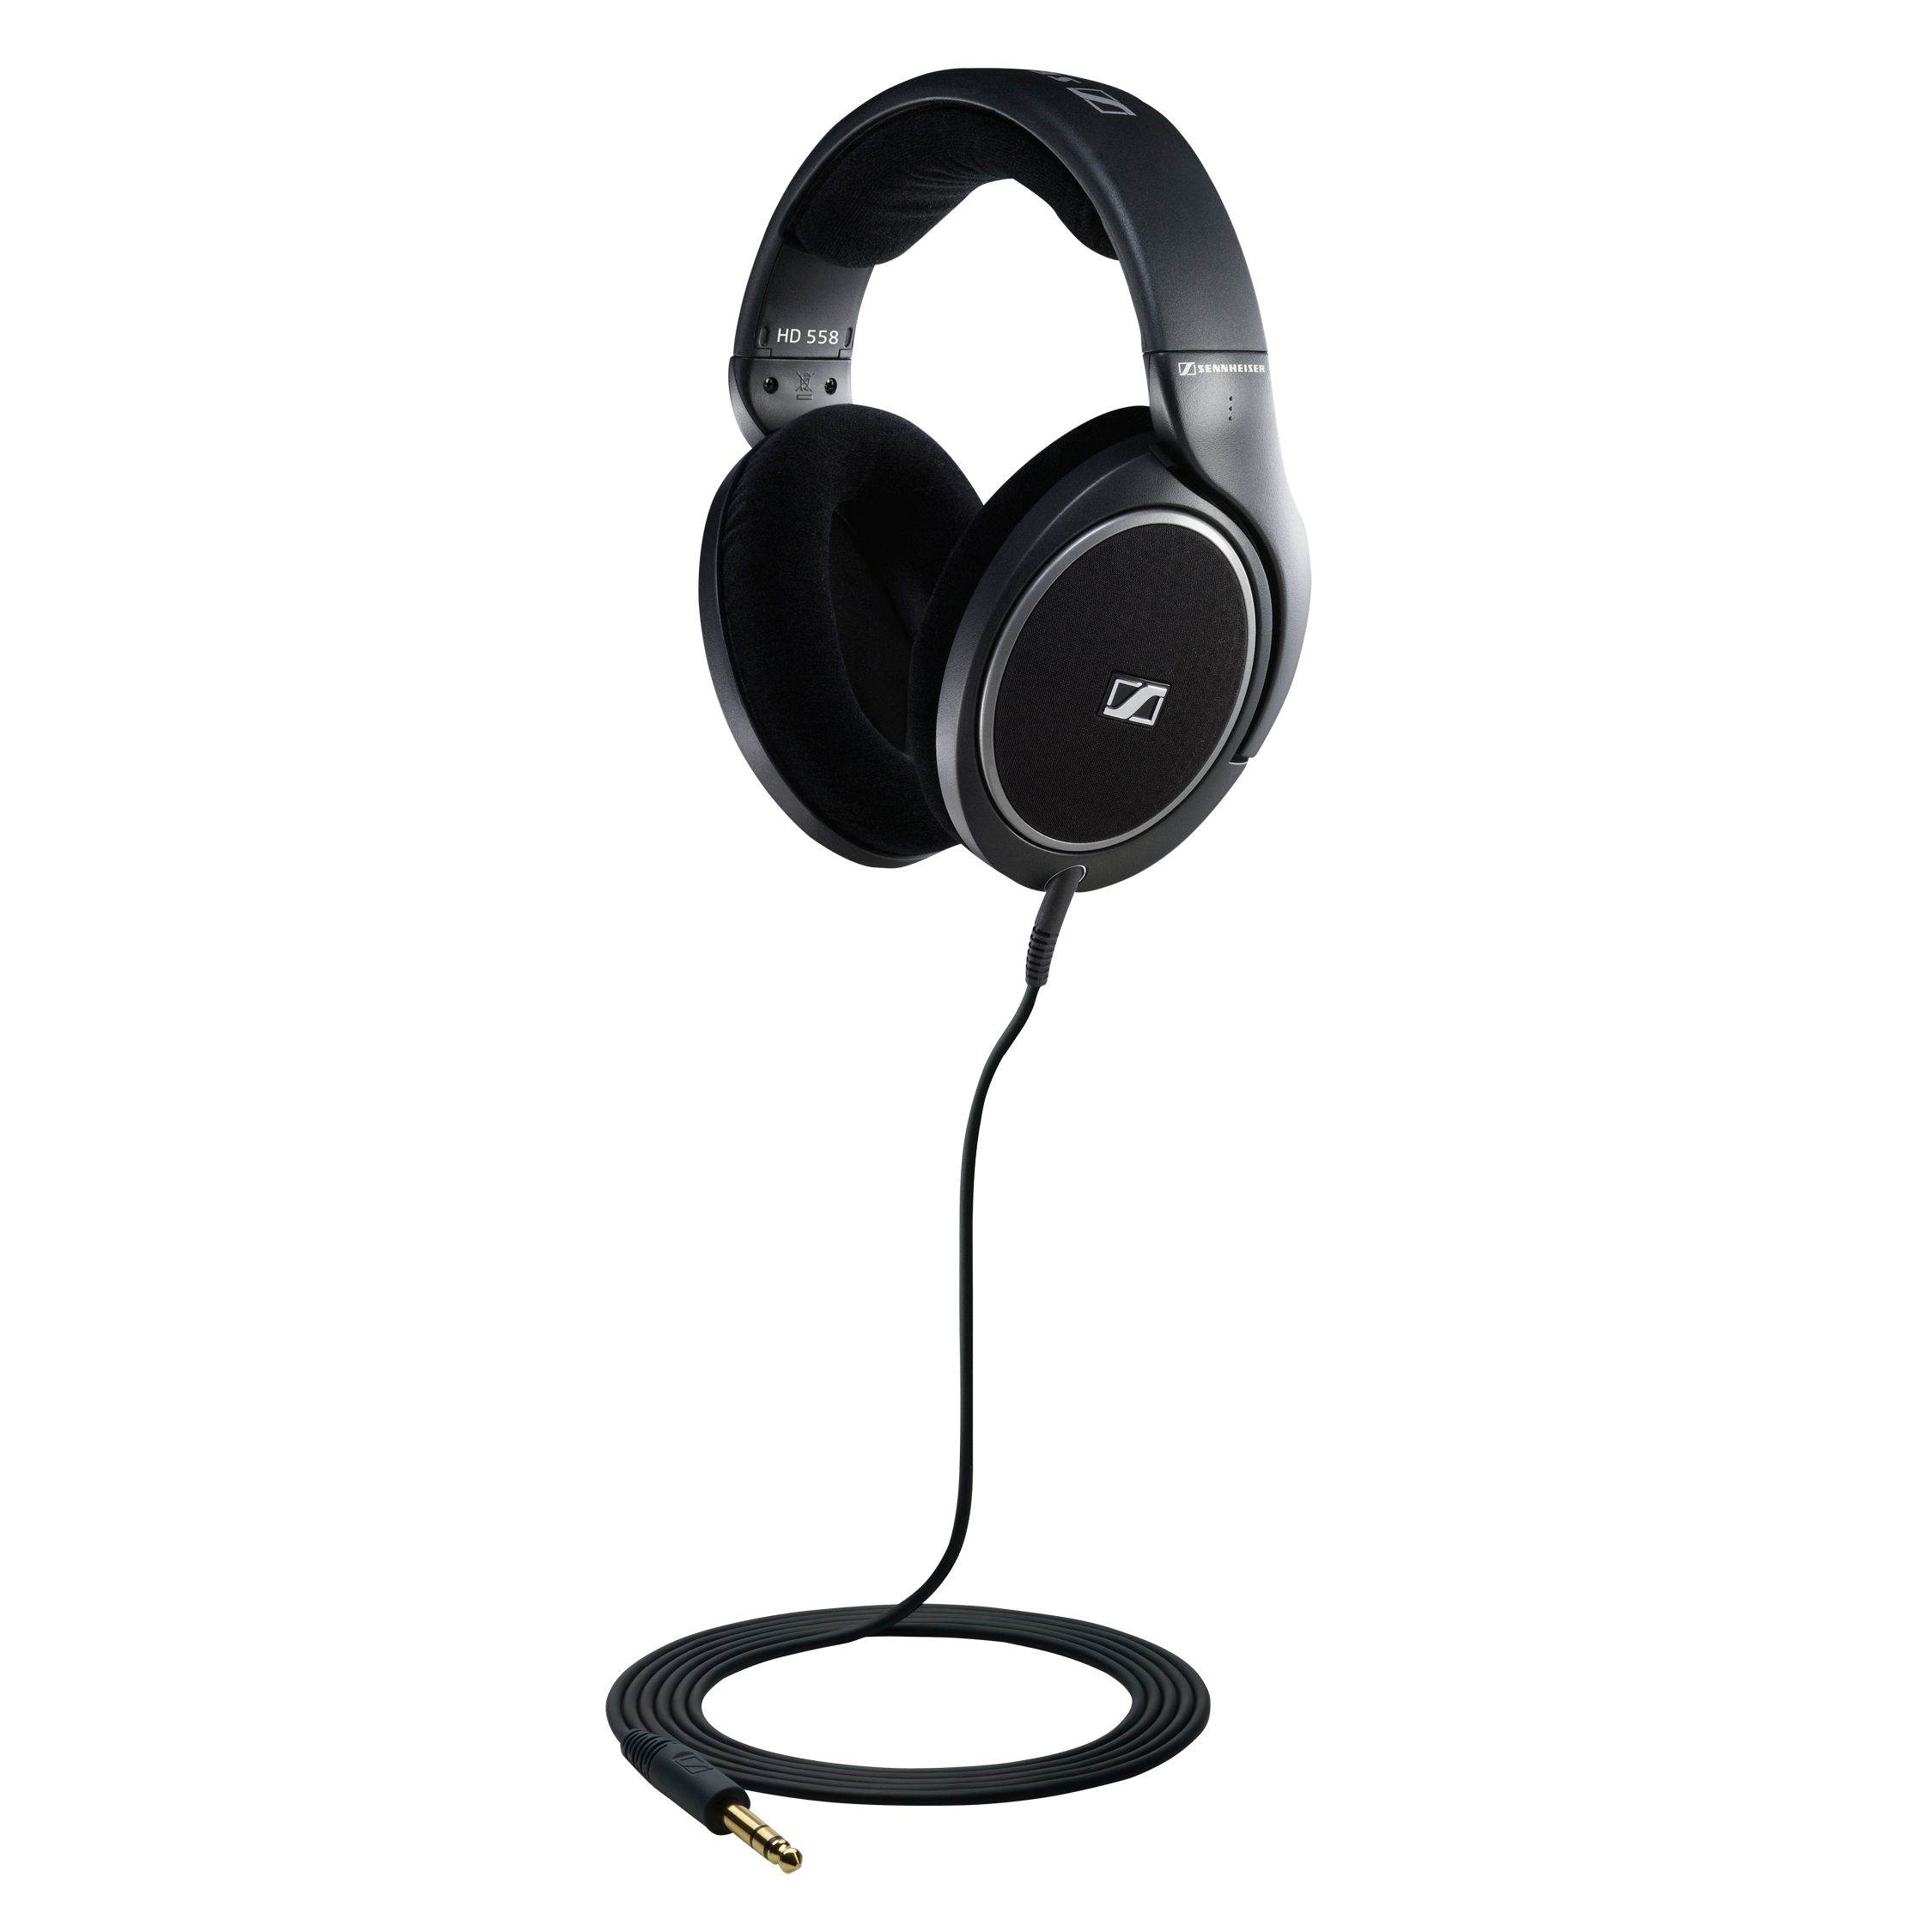 Sennheiser HD558 Over-Ear Headphones, Black at John Lewis